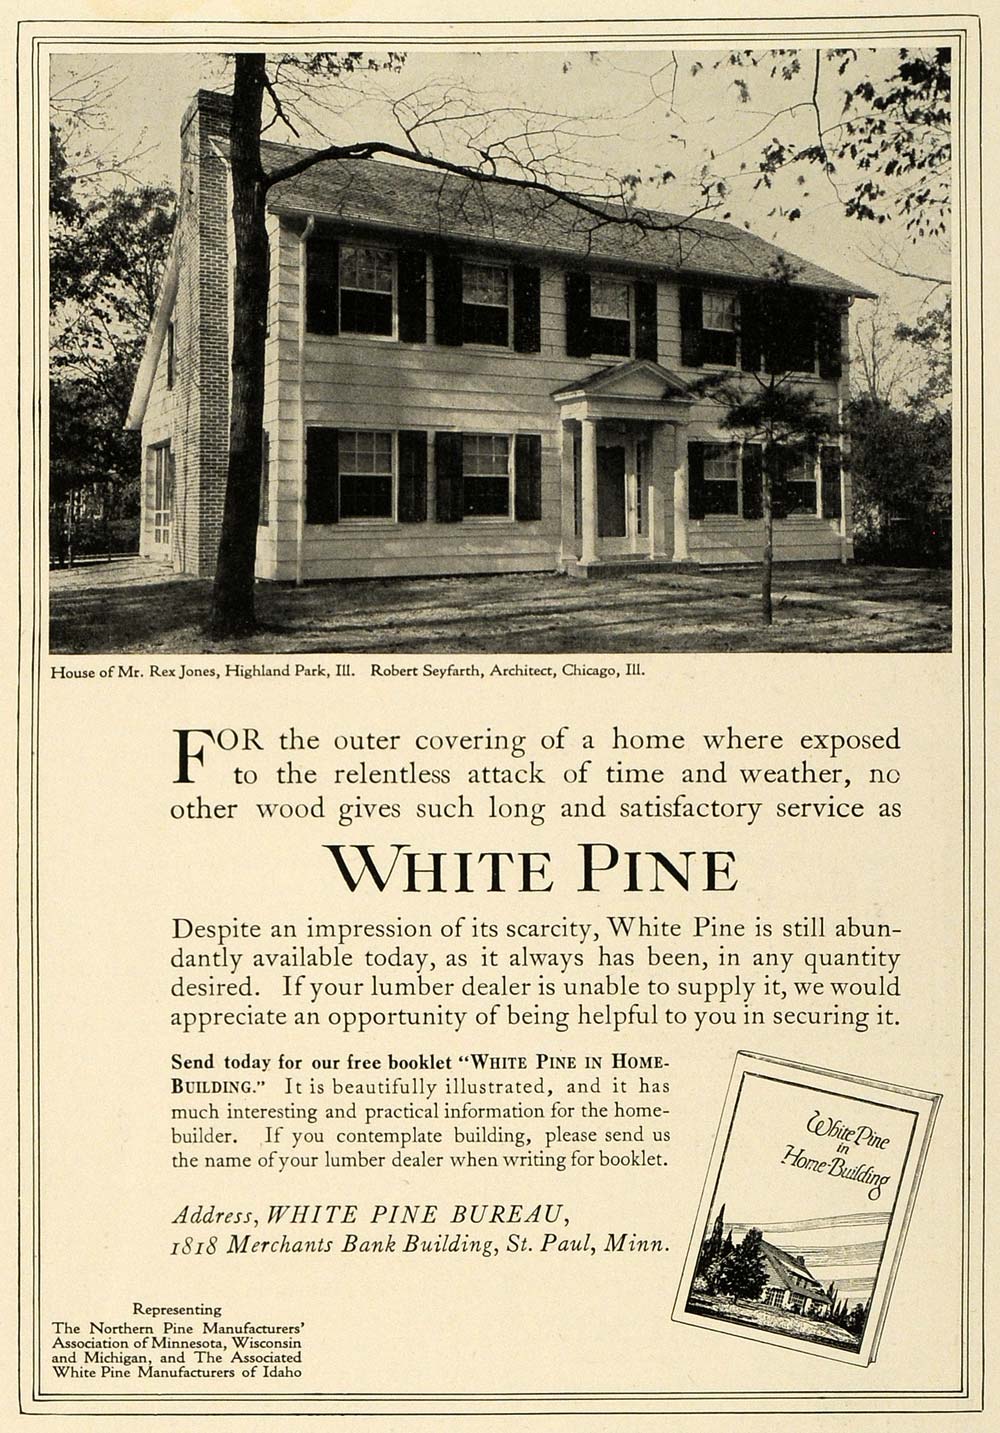 1915 Ad White Pine Rex Jones House Highland Park IL. - ORIGINAL ADVERTISING THB1